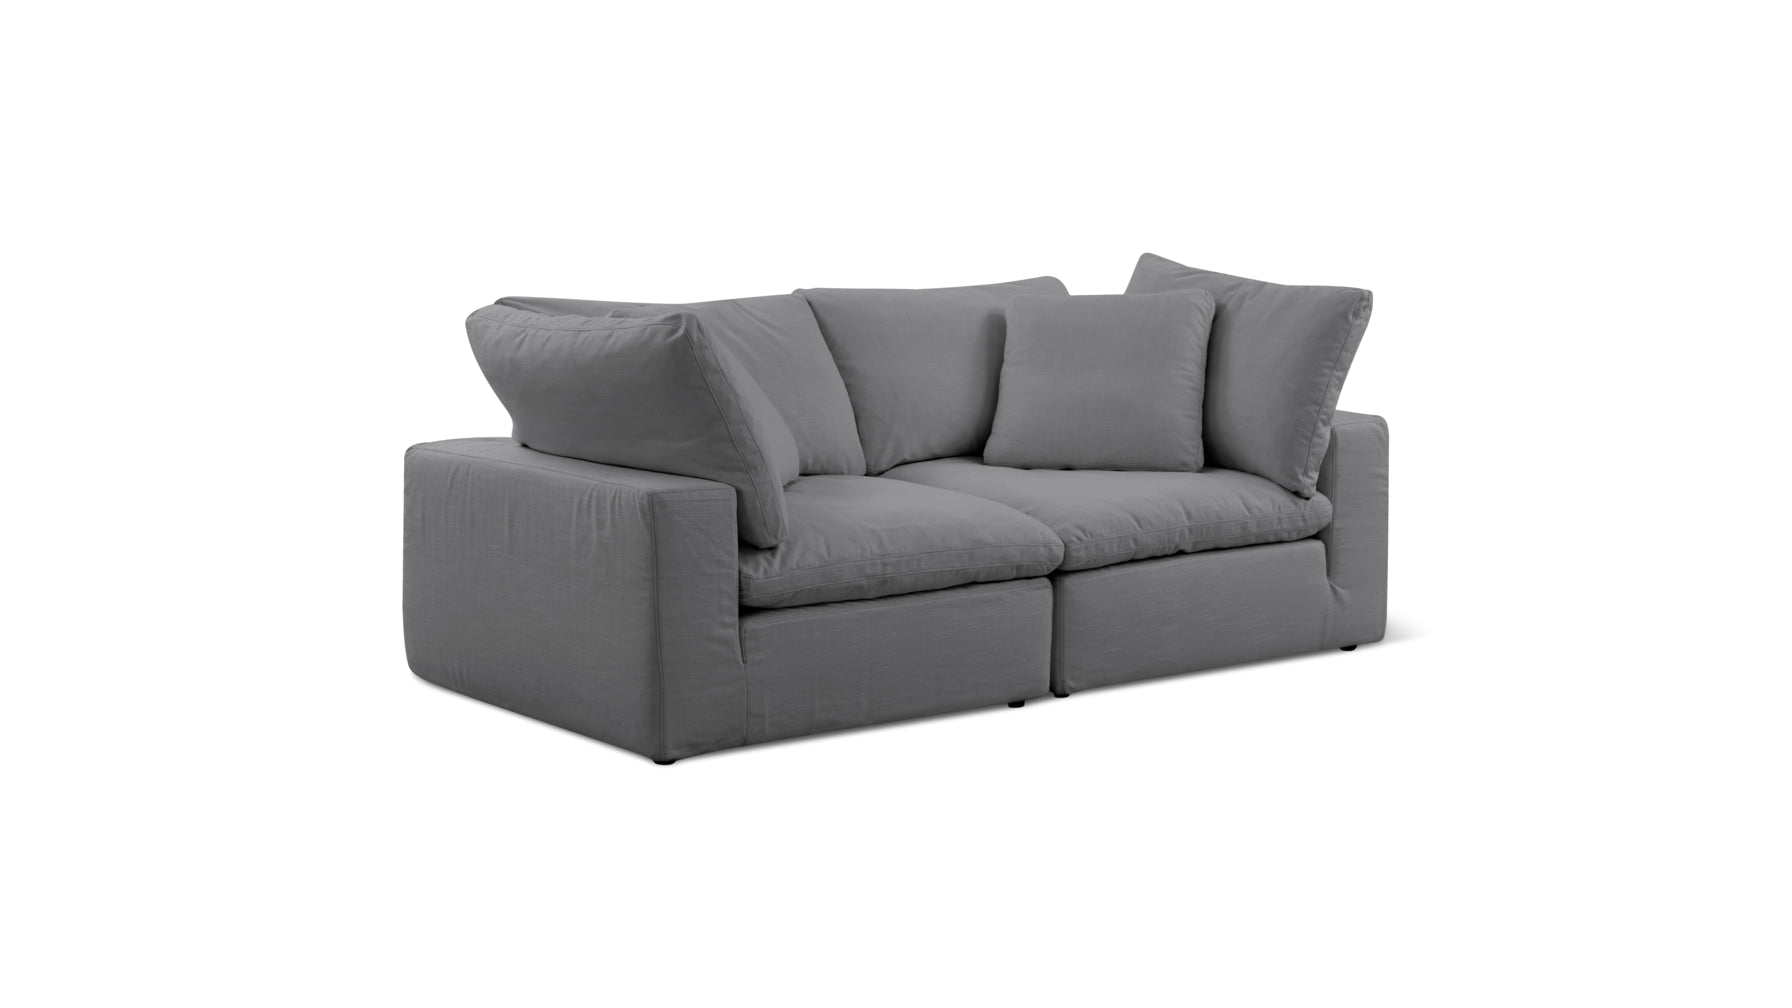 Movie Night™ 2-Piece Modular Sofa, Large, Gentle Rain - Image 4